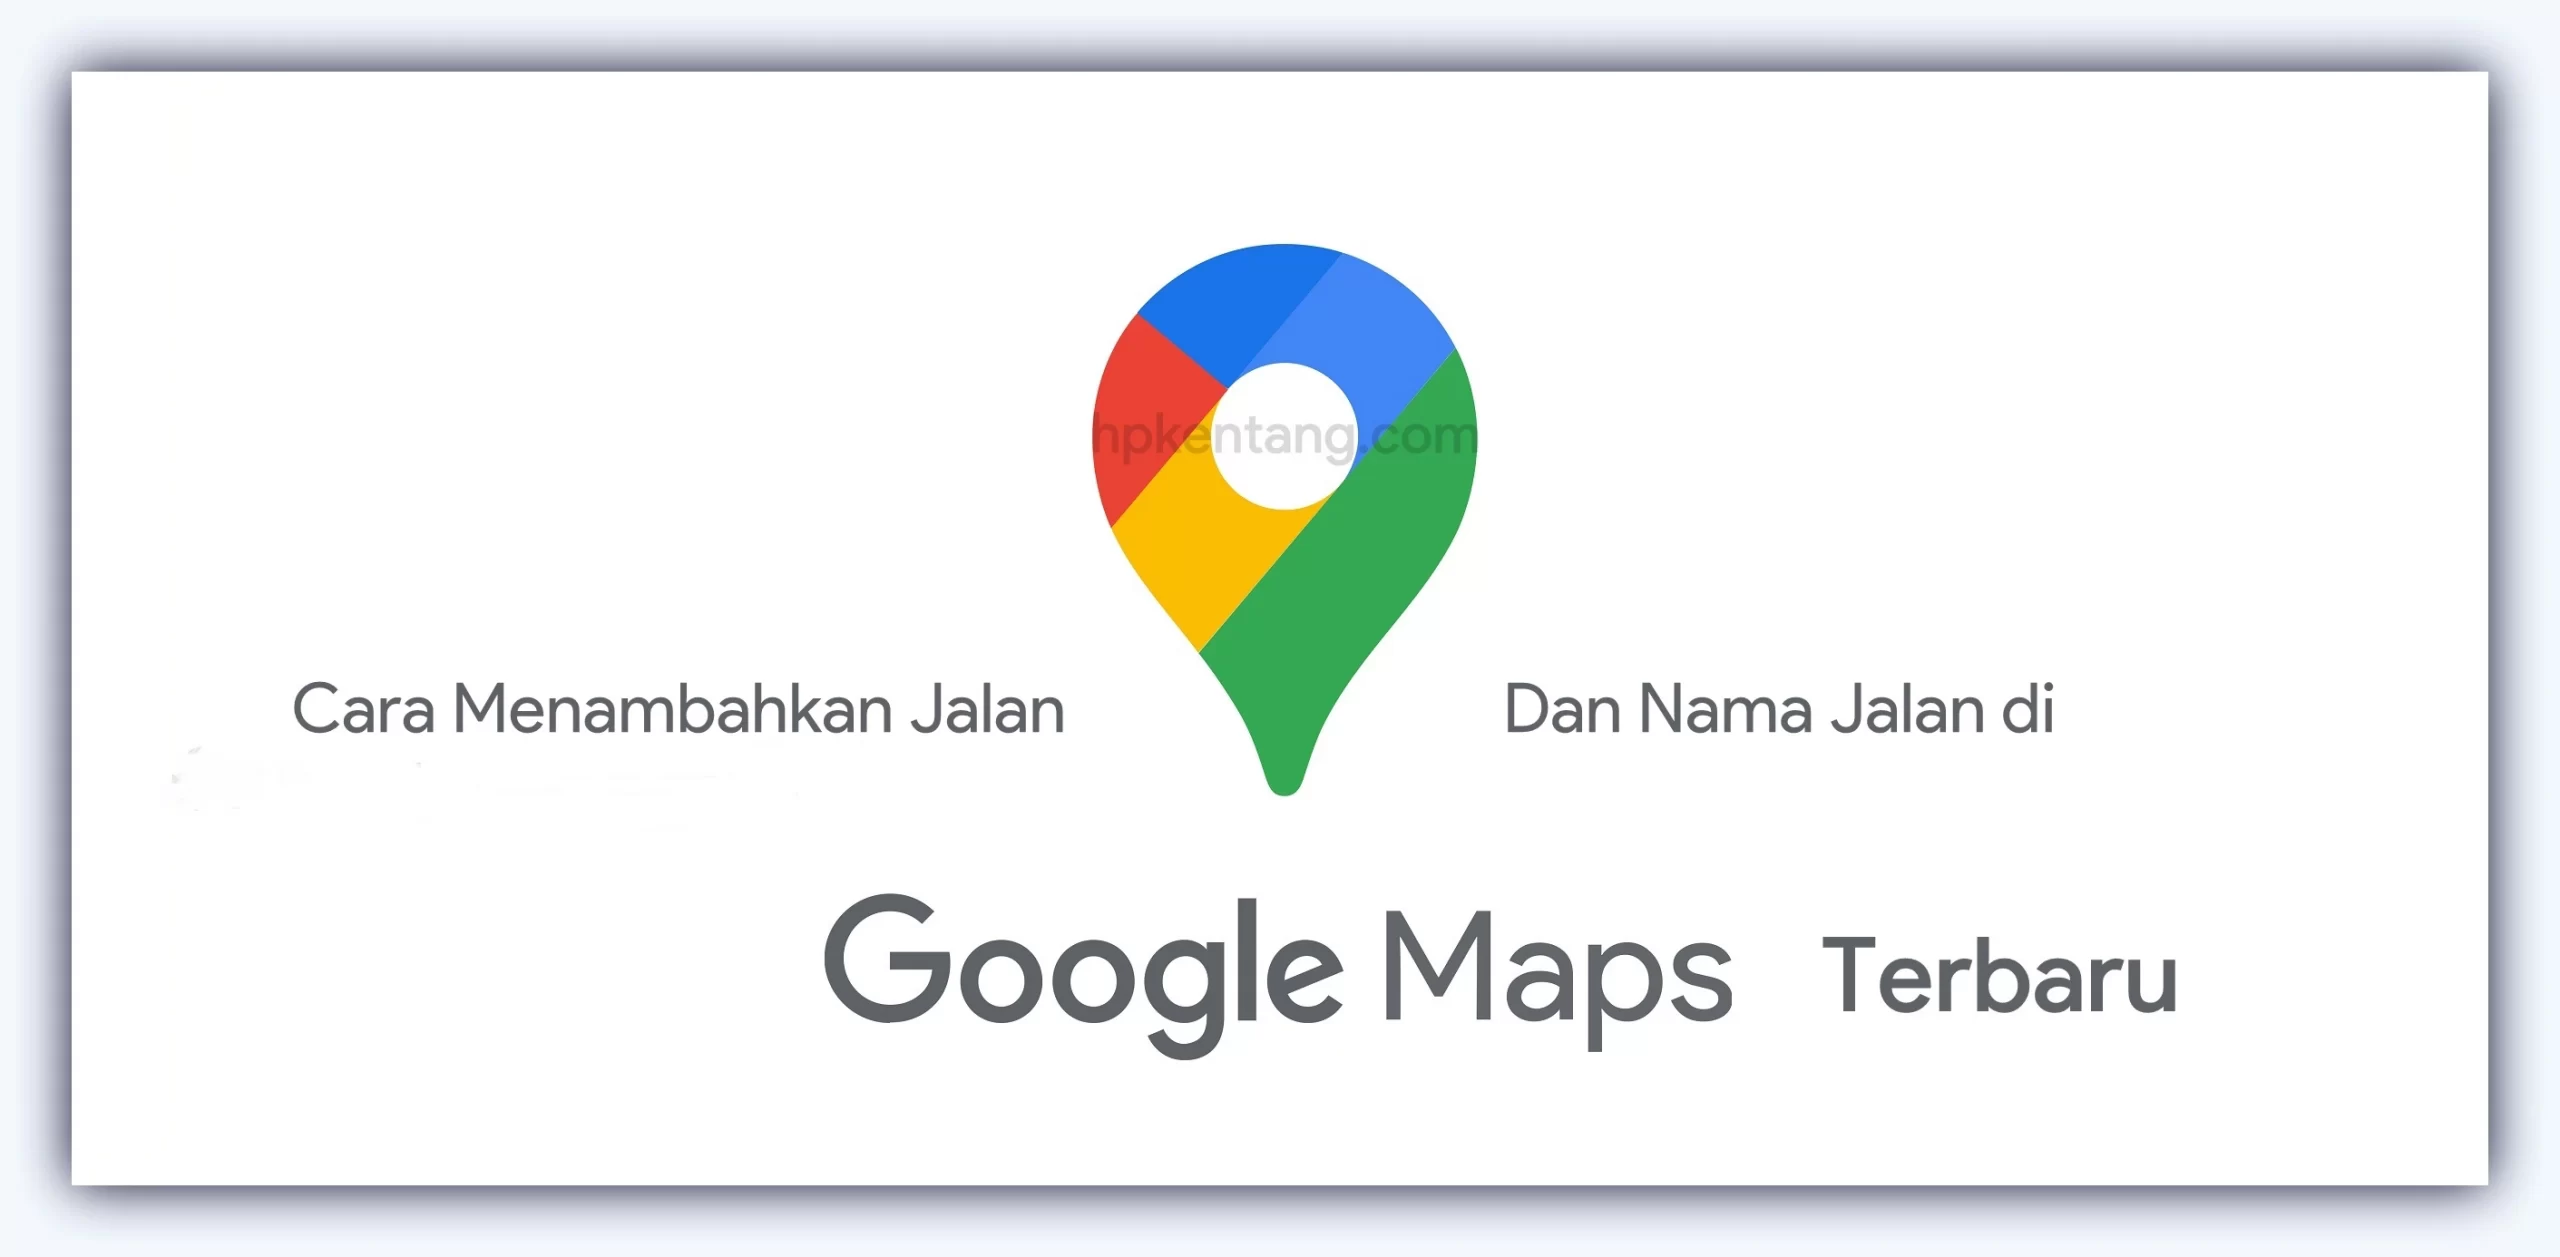 Cara Menambahkan Jalan Di Google Maps